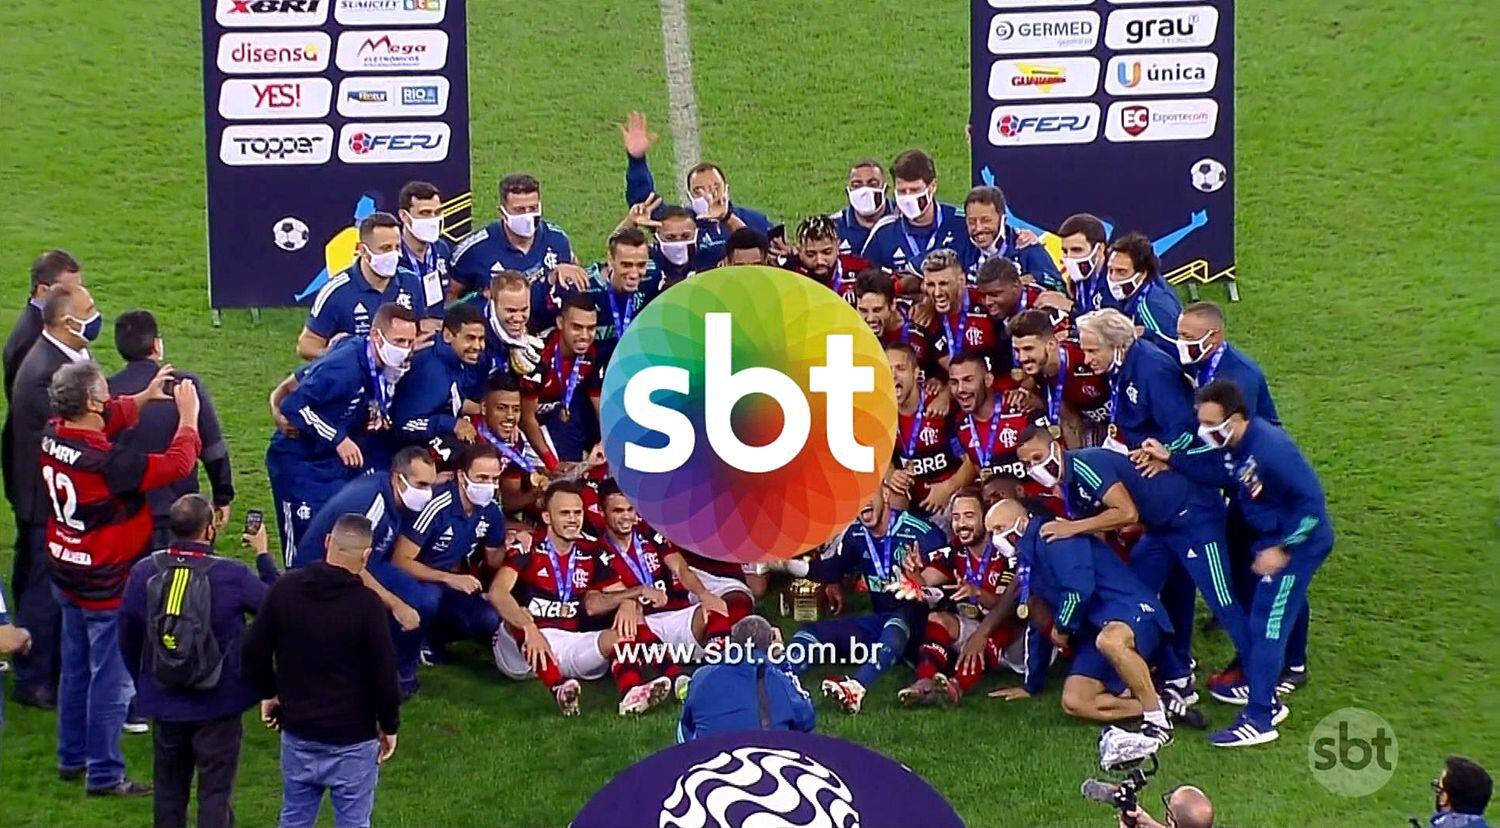 Encerramento do Campeonato Carioca no SBT.